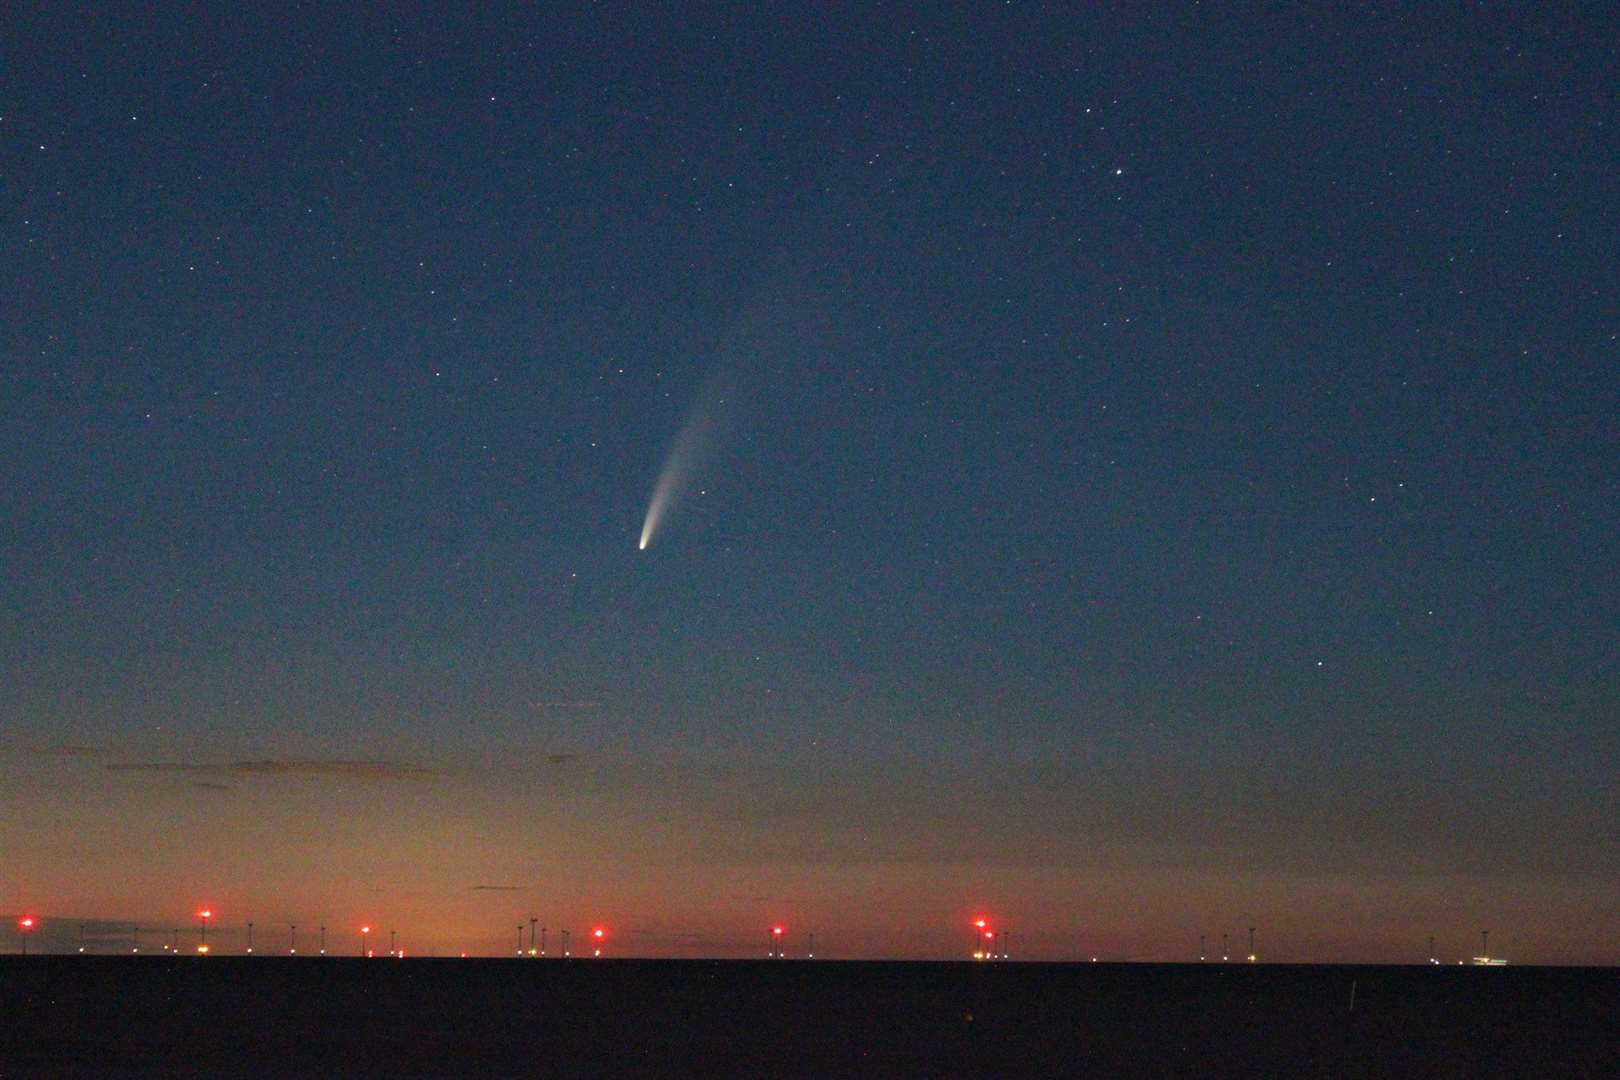 Garry Simmons captured the comet in the skies over Tankerton